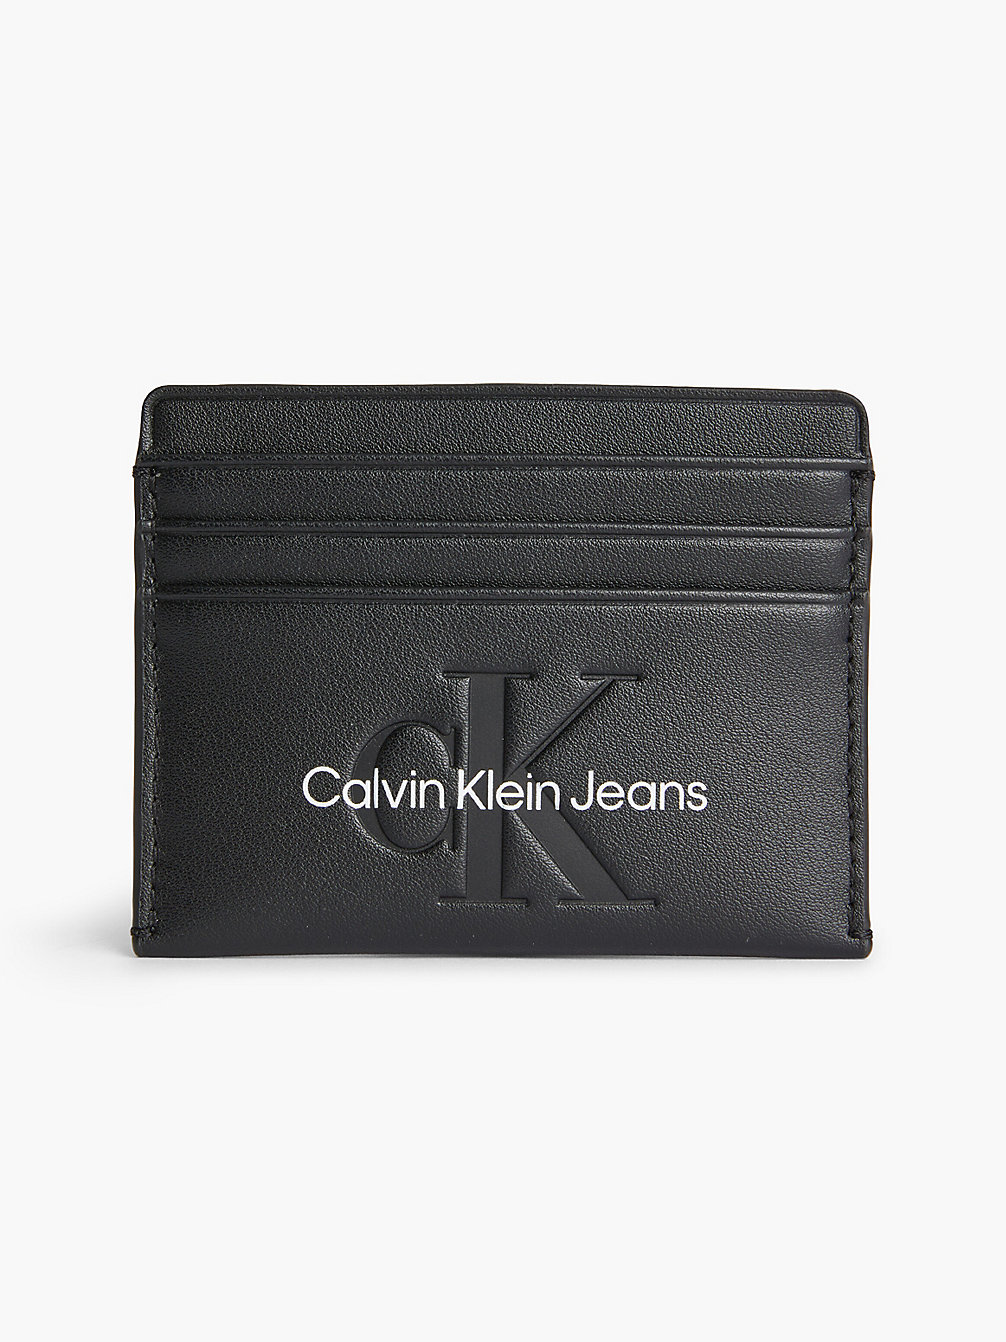 BLACK > Kartenetui > undefined Damen - Calvin Klein